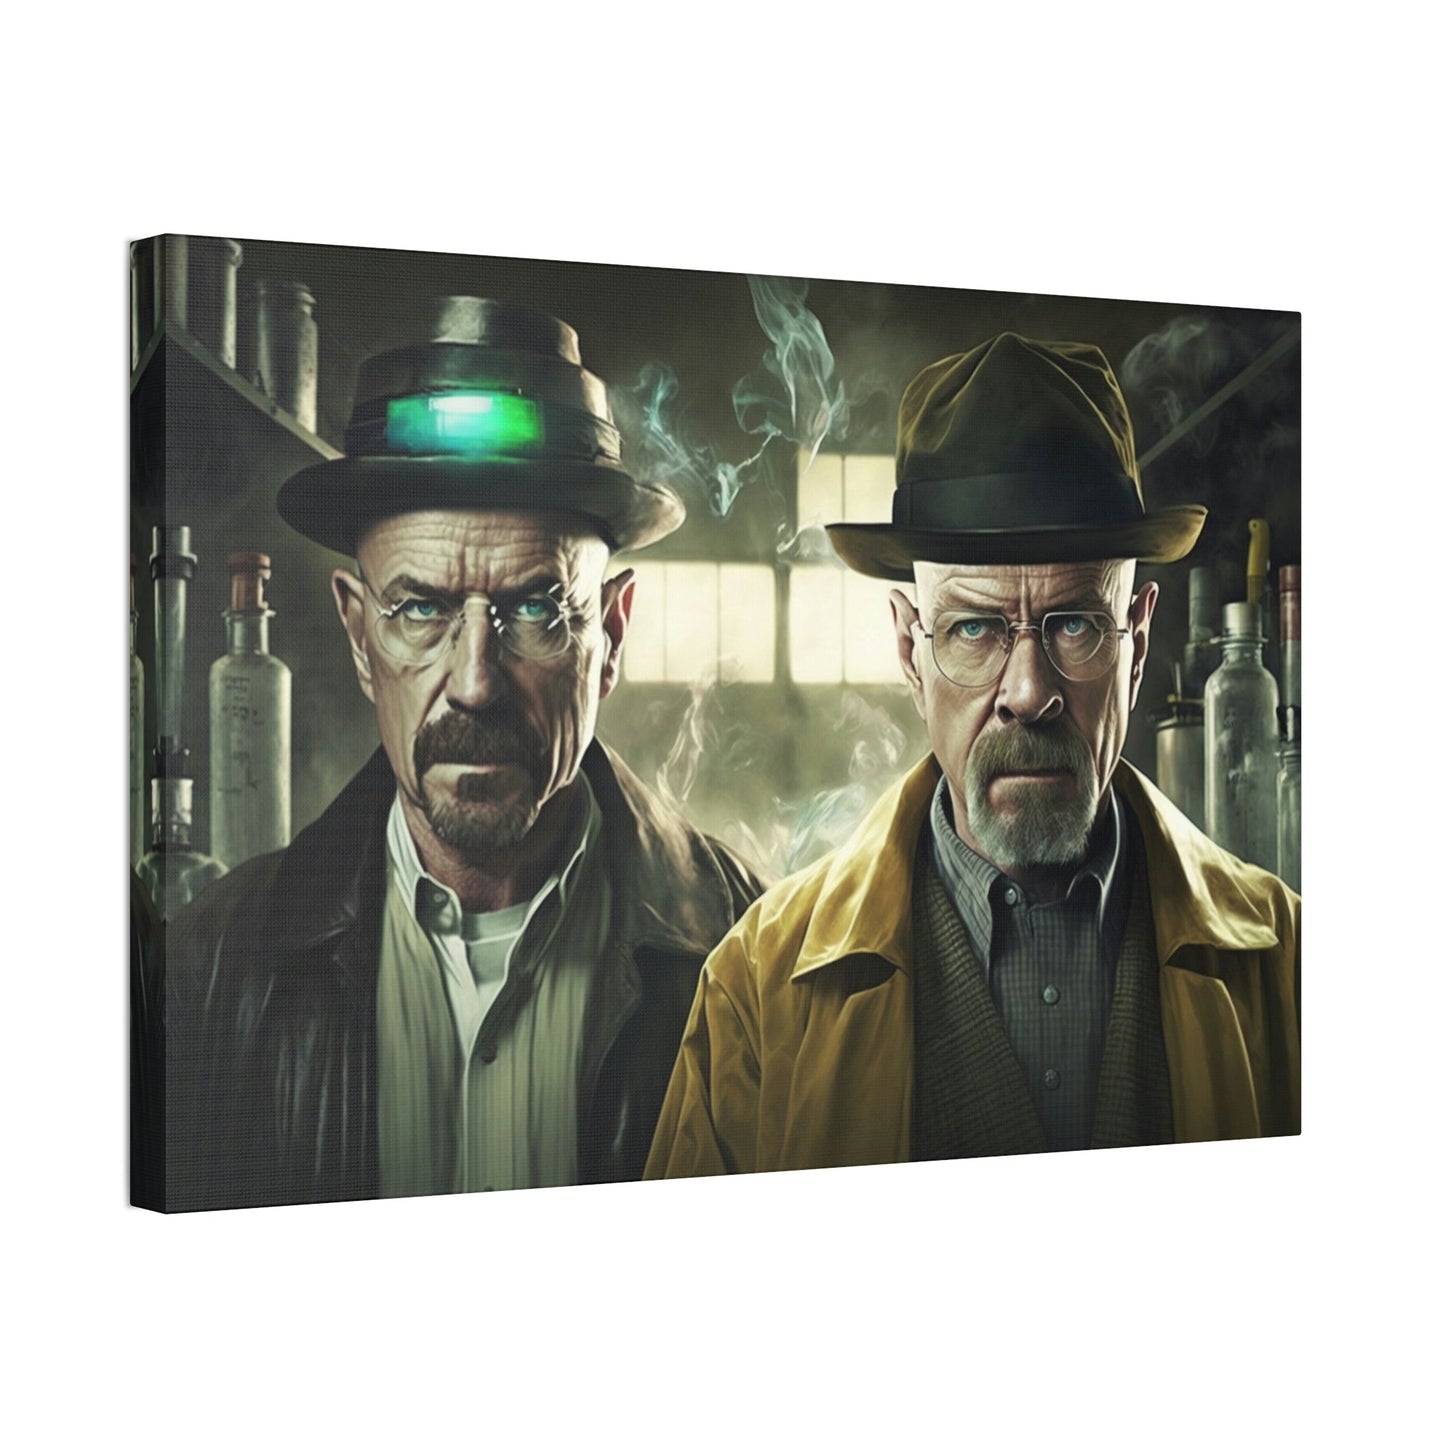 Heisenberg's Legacy: Iconic Breaking Bad Artwork on Canvas